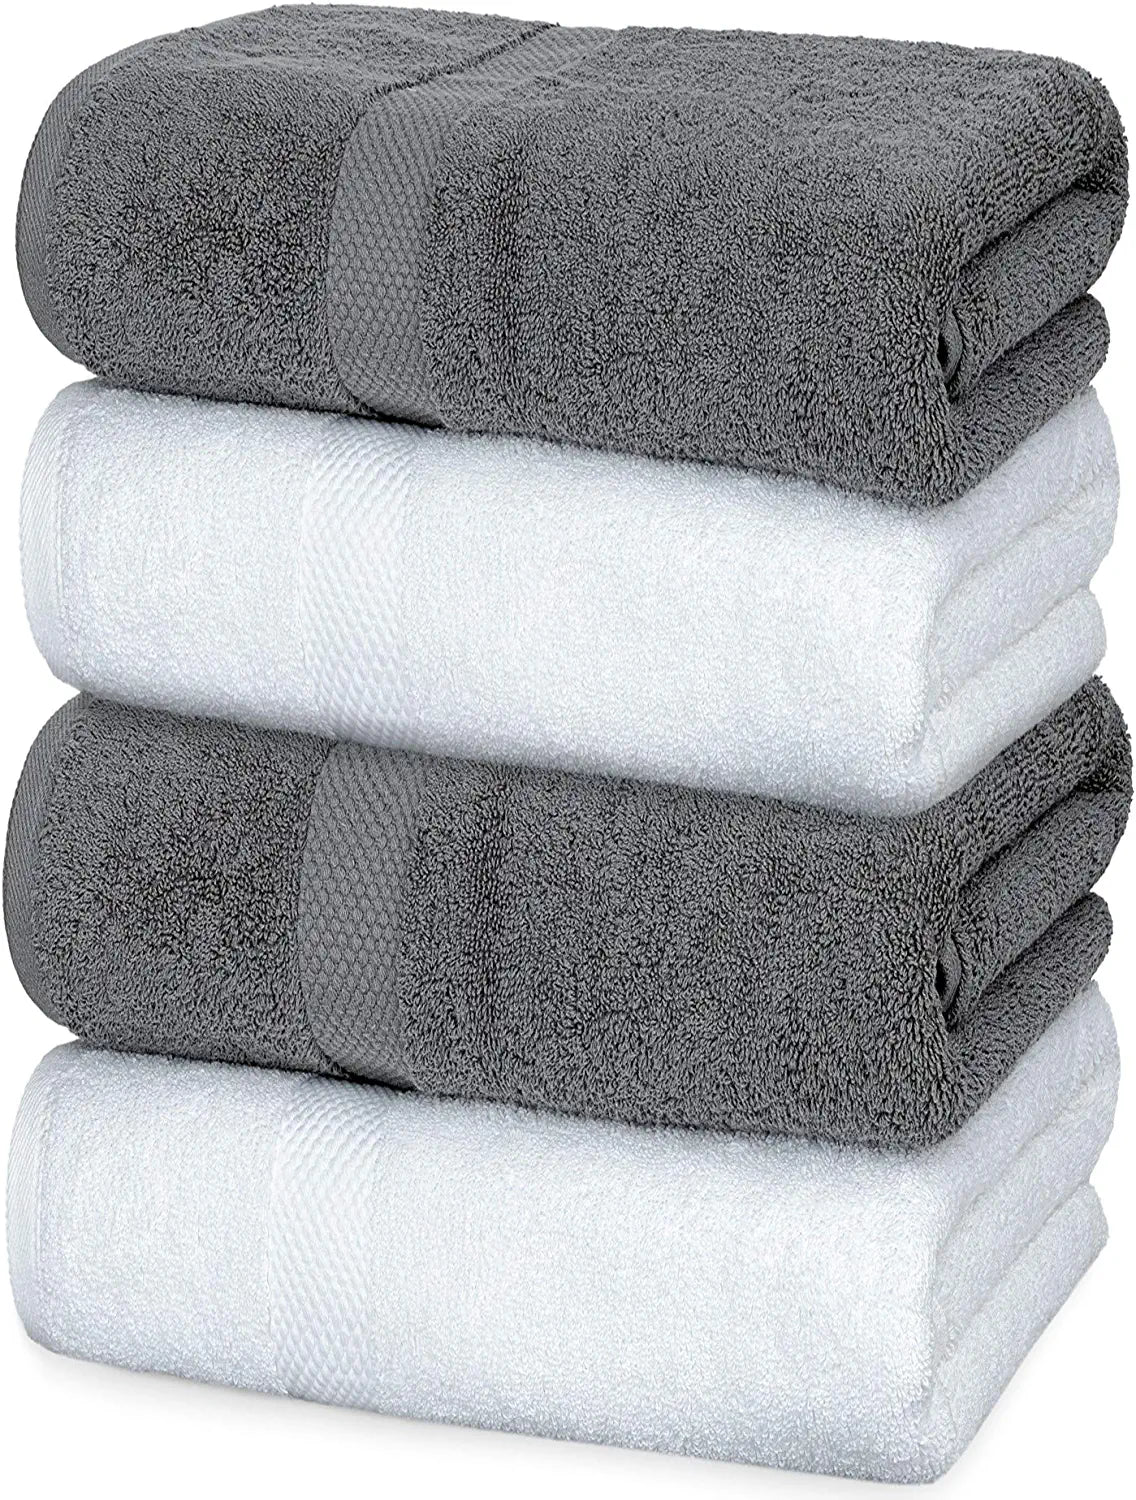 White and Gray Bath Towel